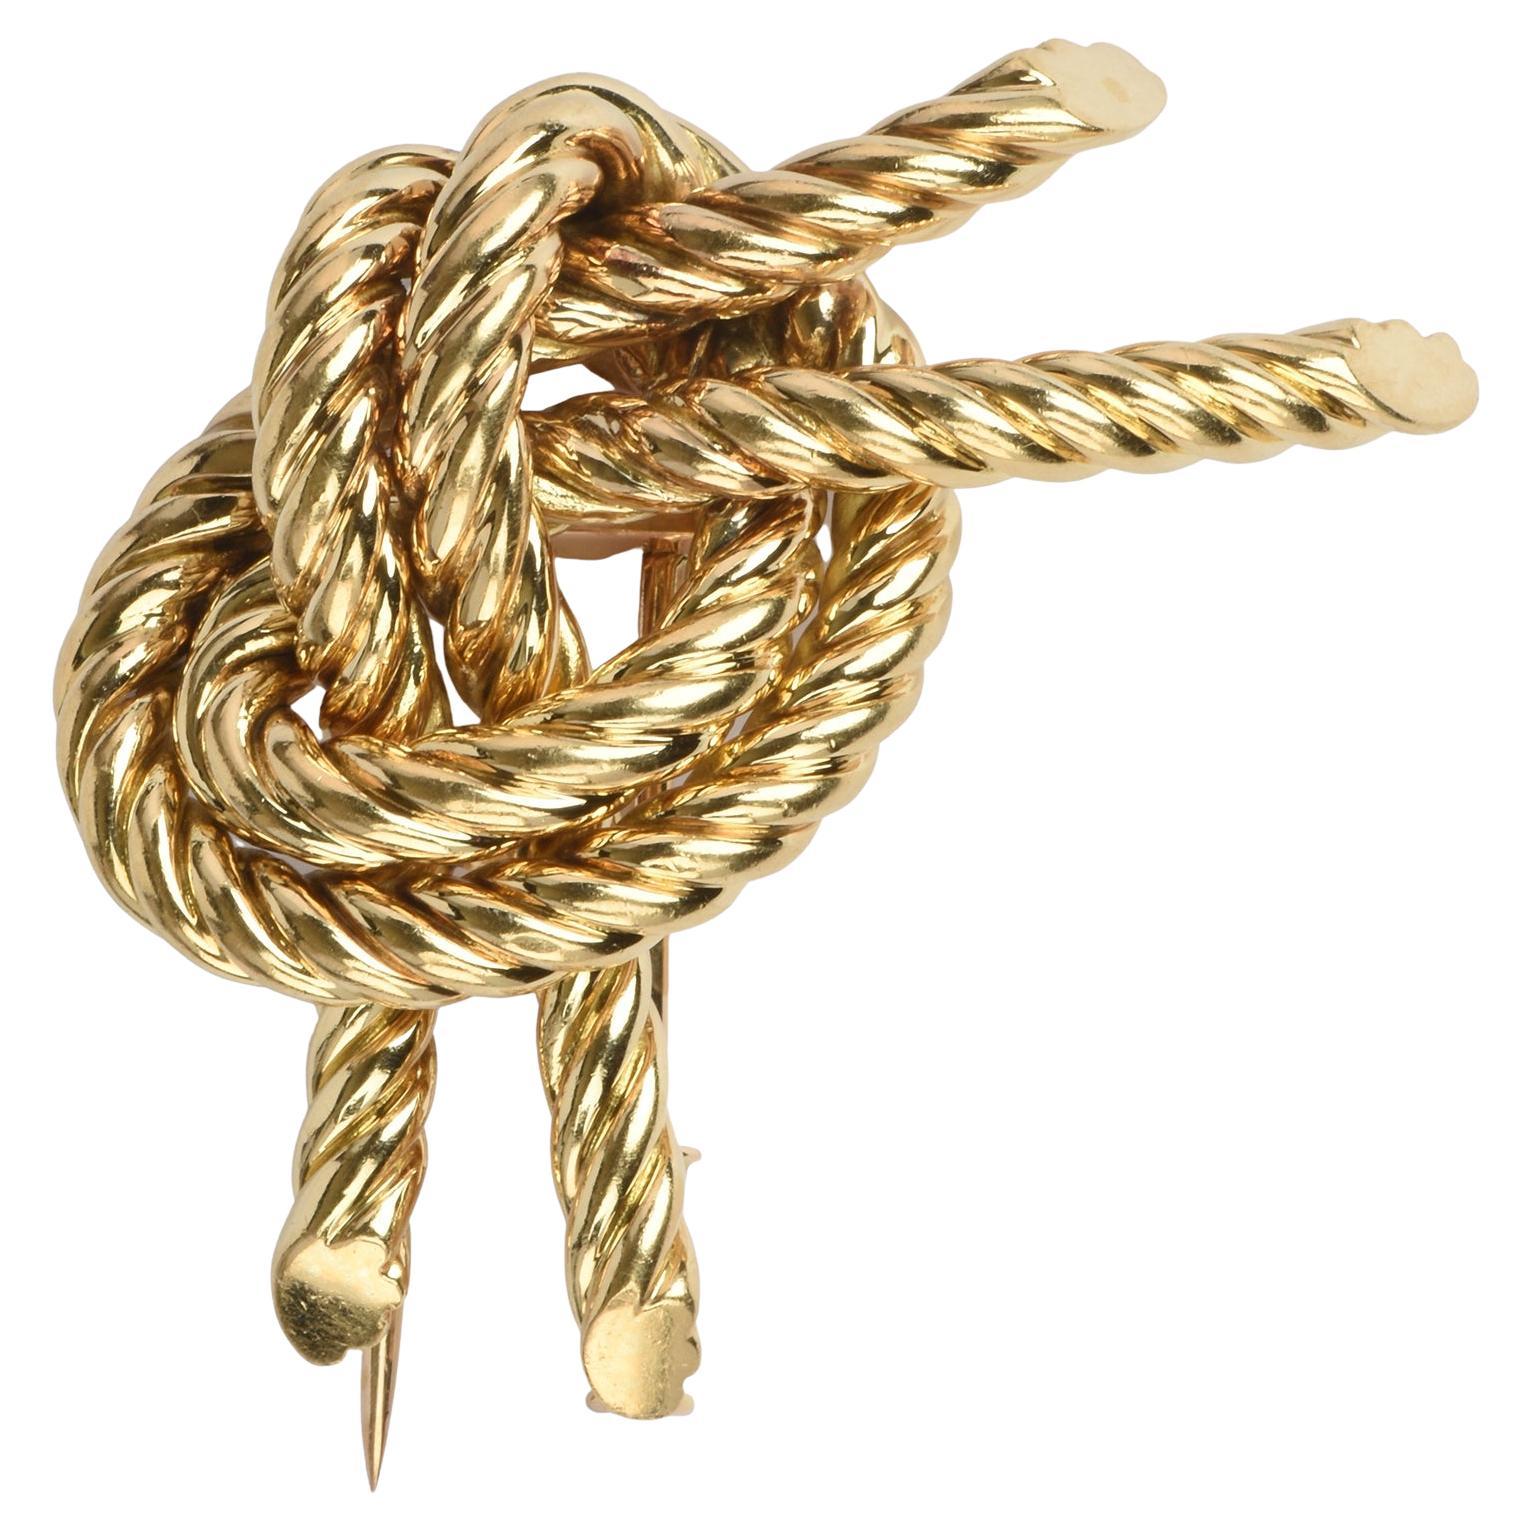 Hermes 18K Gold Tied Rope Knot Brooch by Georges L'enfant